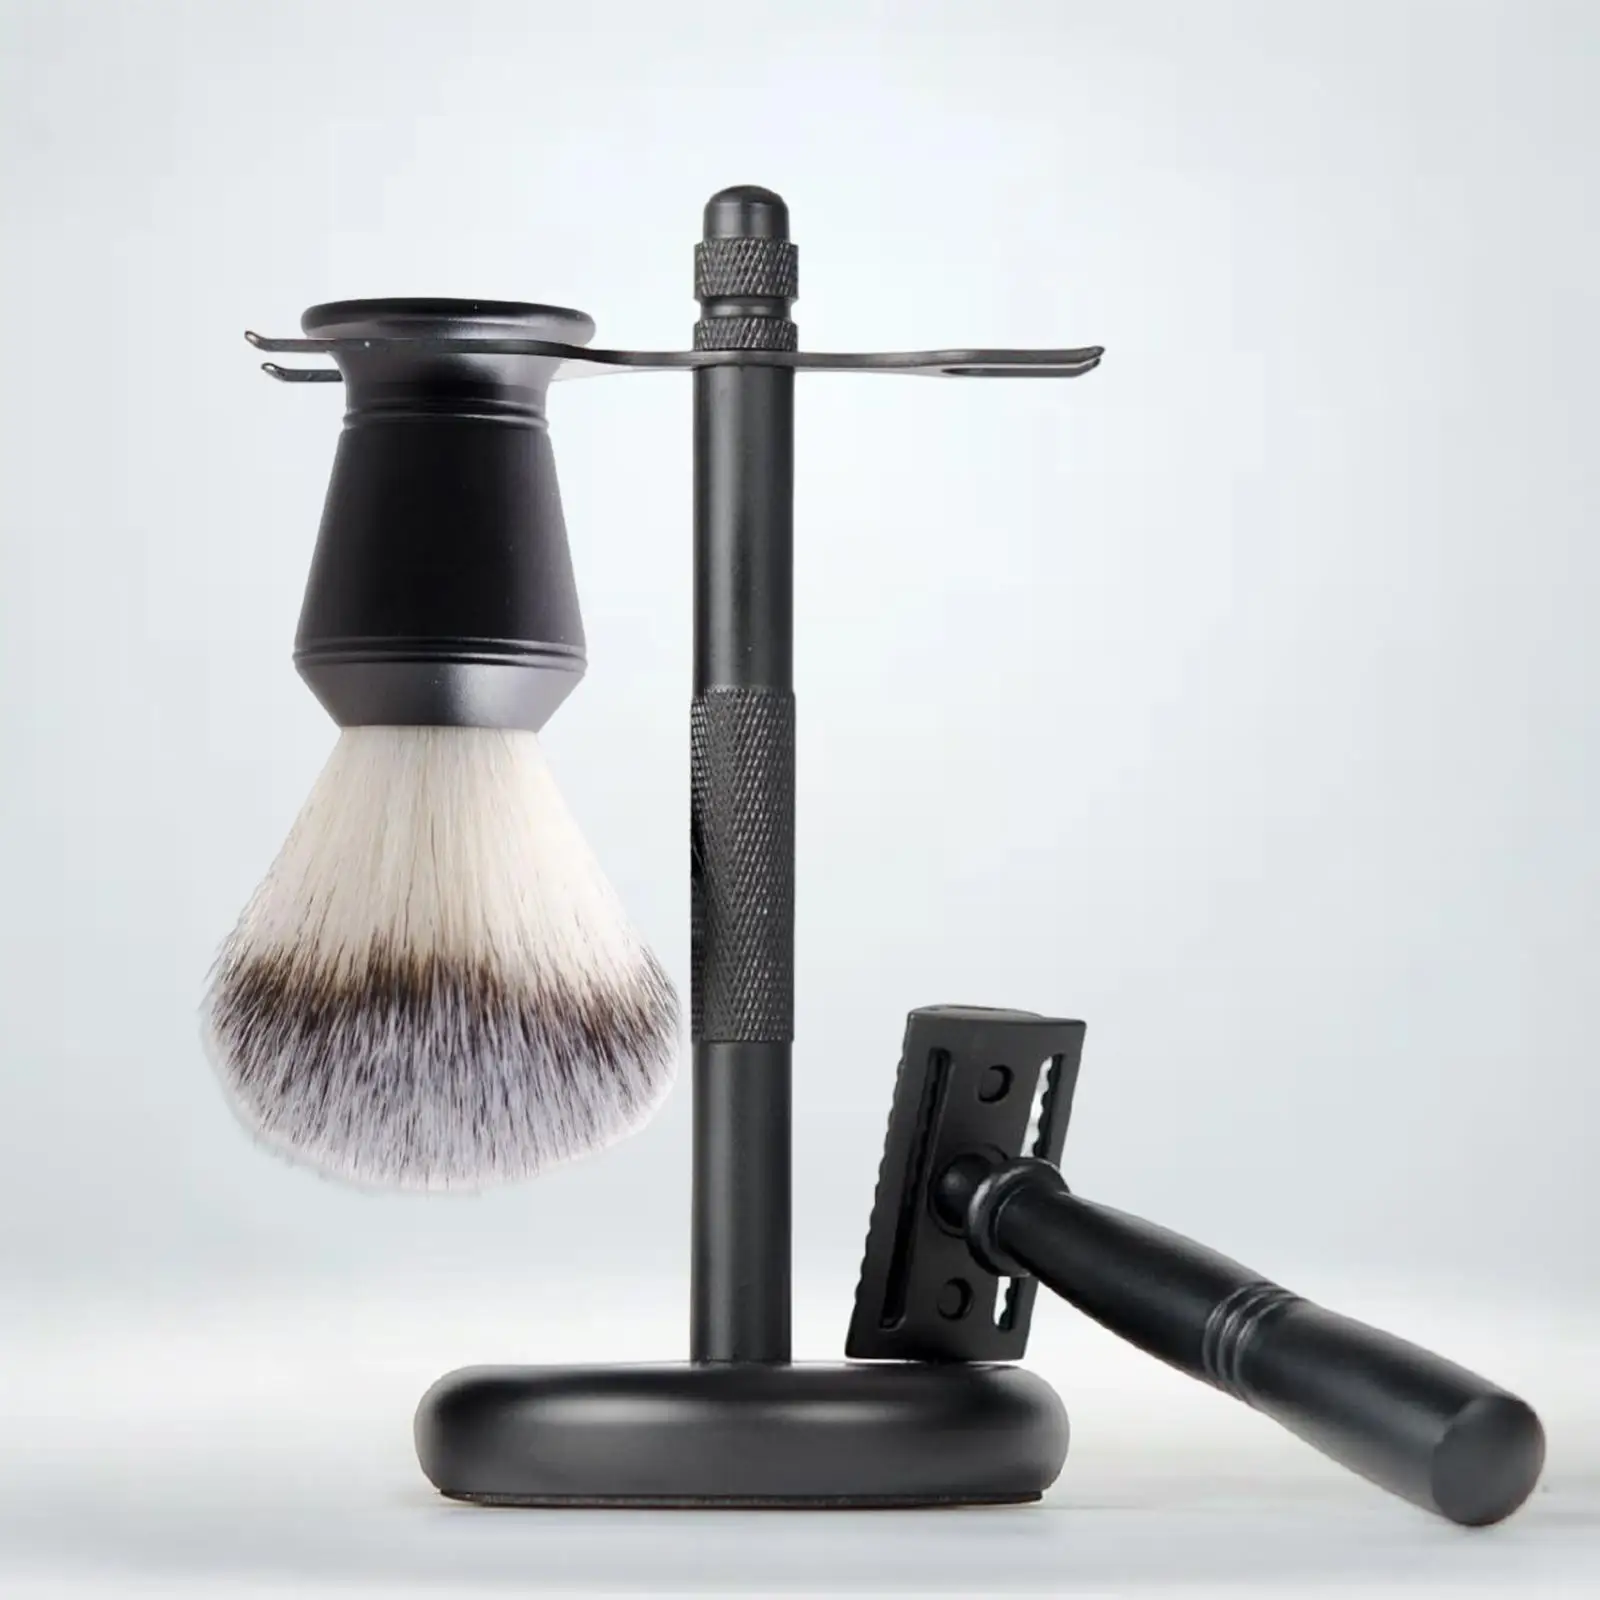 3 Pieces Shaving Set, Shaving Brush Stand Set Black Color Double Edge Safety